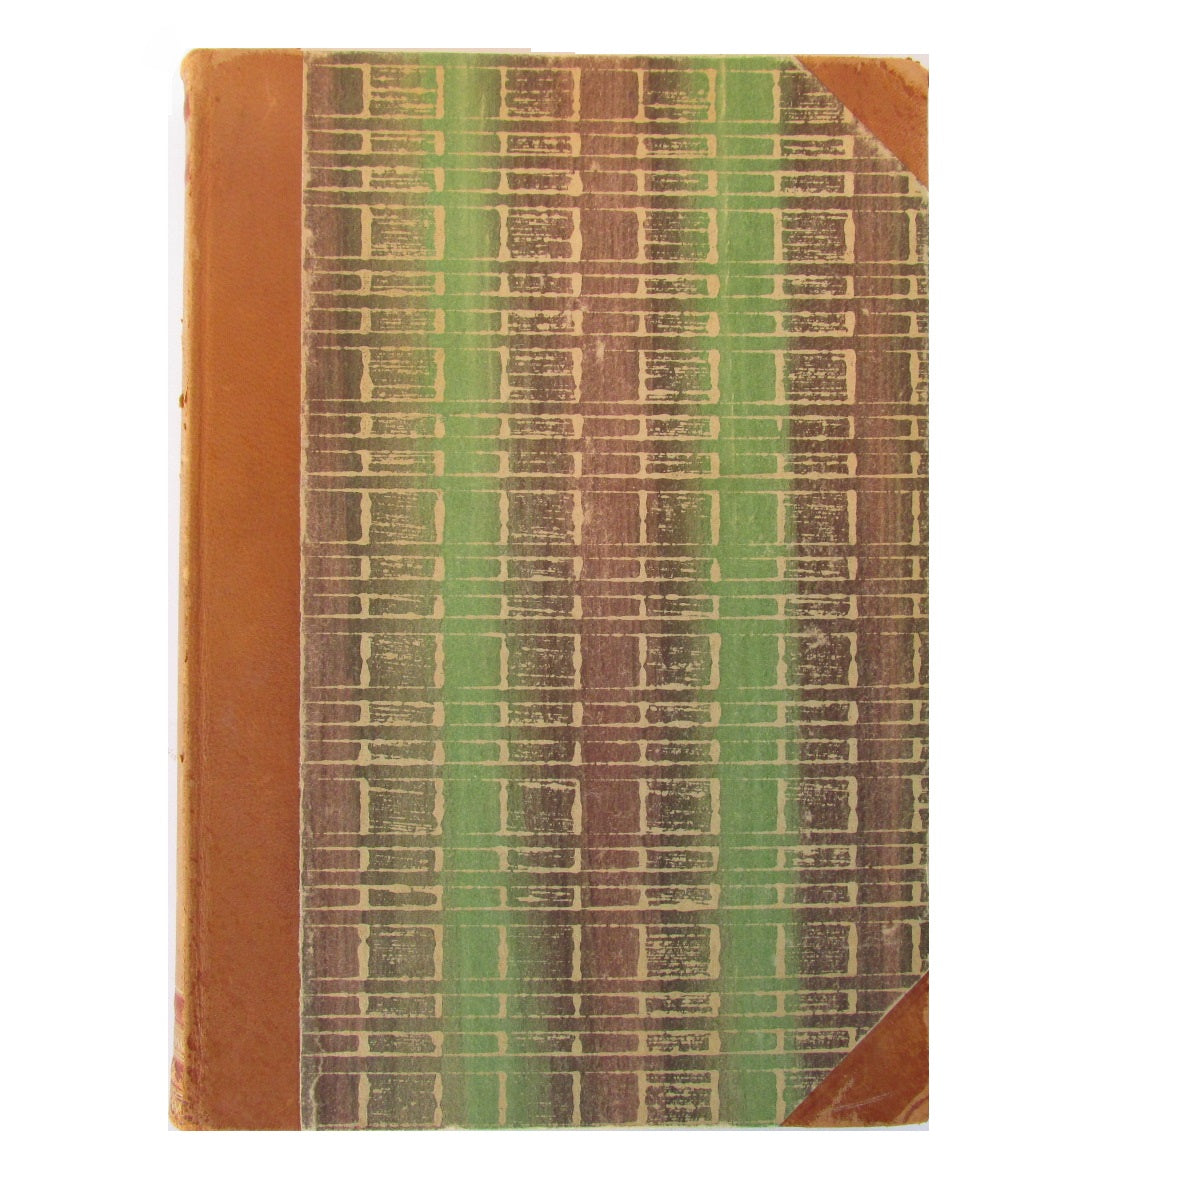 Antique Decorative Orange and Green Book